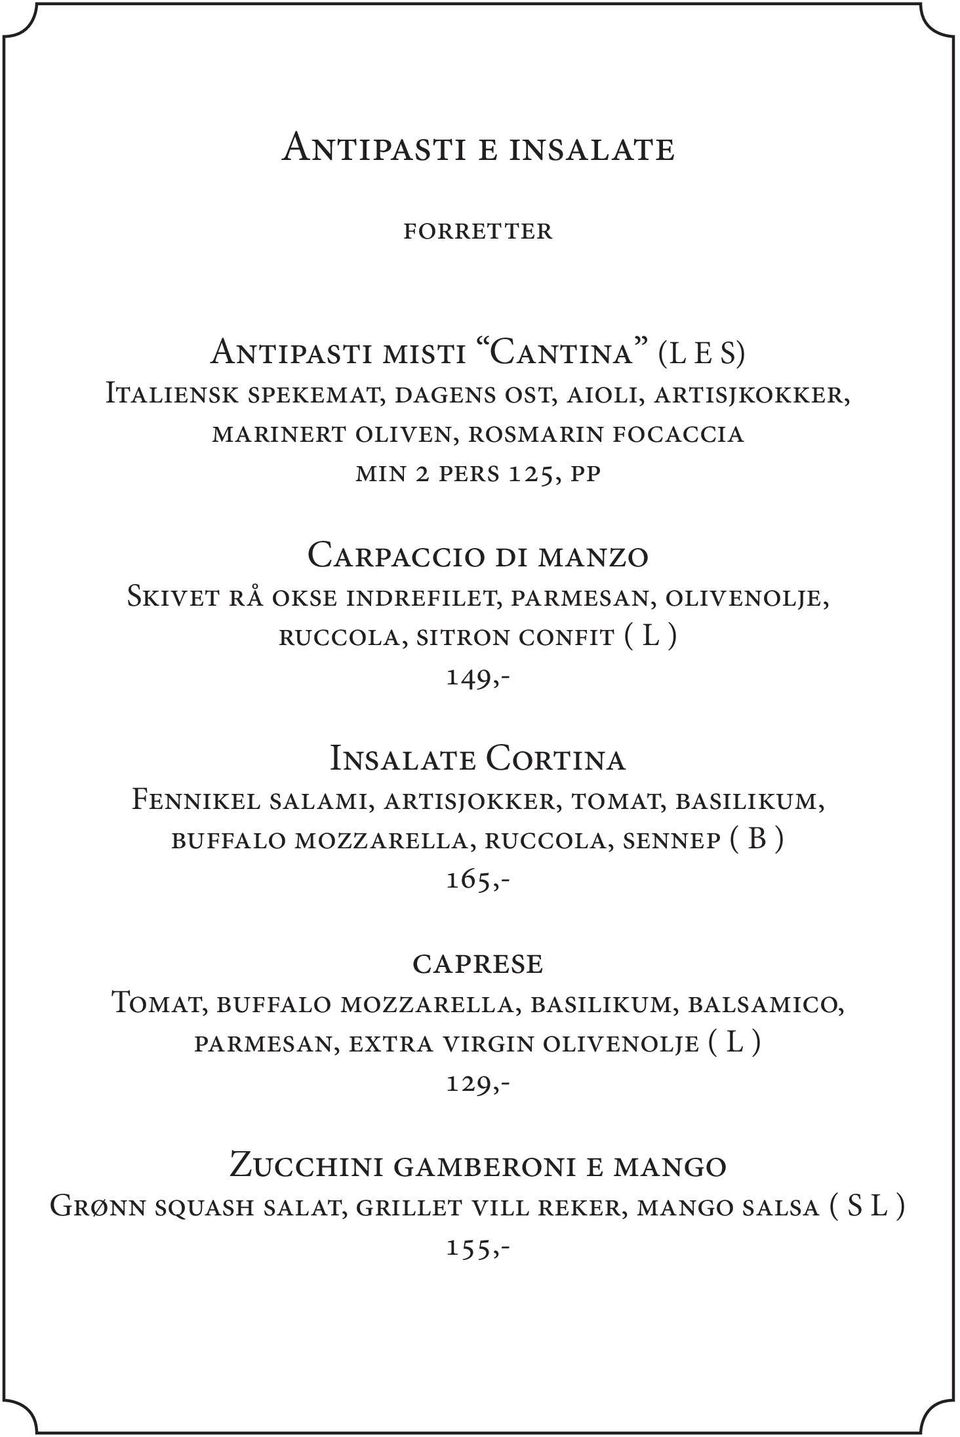 Cortina Fennikel salami, artisjokker, tomat, basilikum, buffalo mozzarella, ruccola, sennep ( B ) 165,- caprese Tomat, buffalo mozzarella,